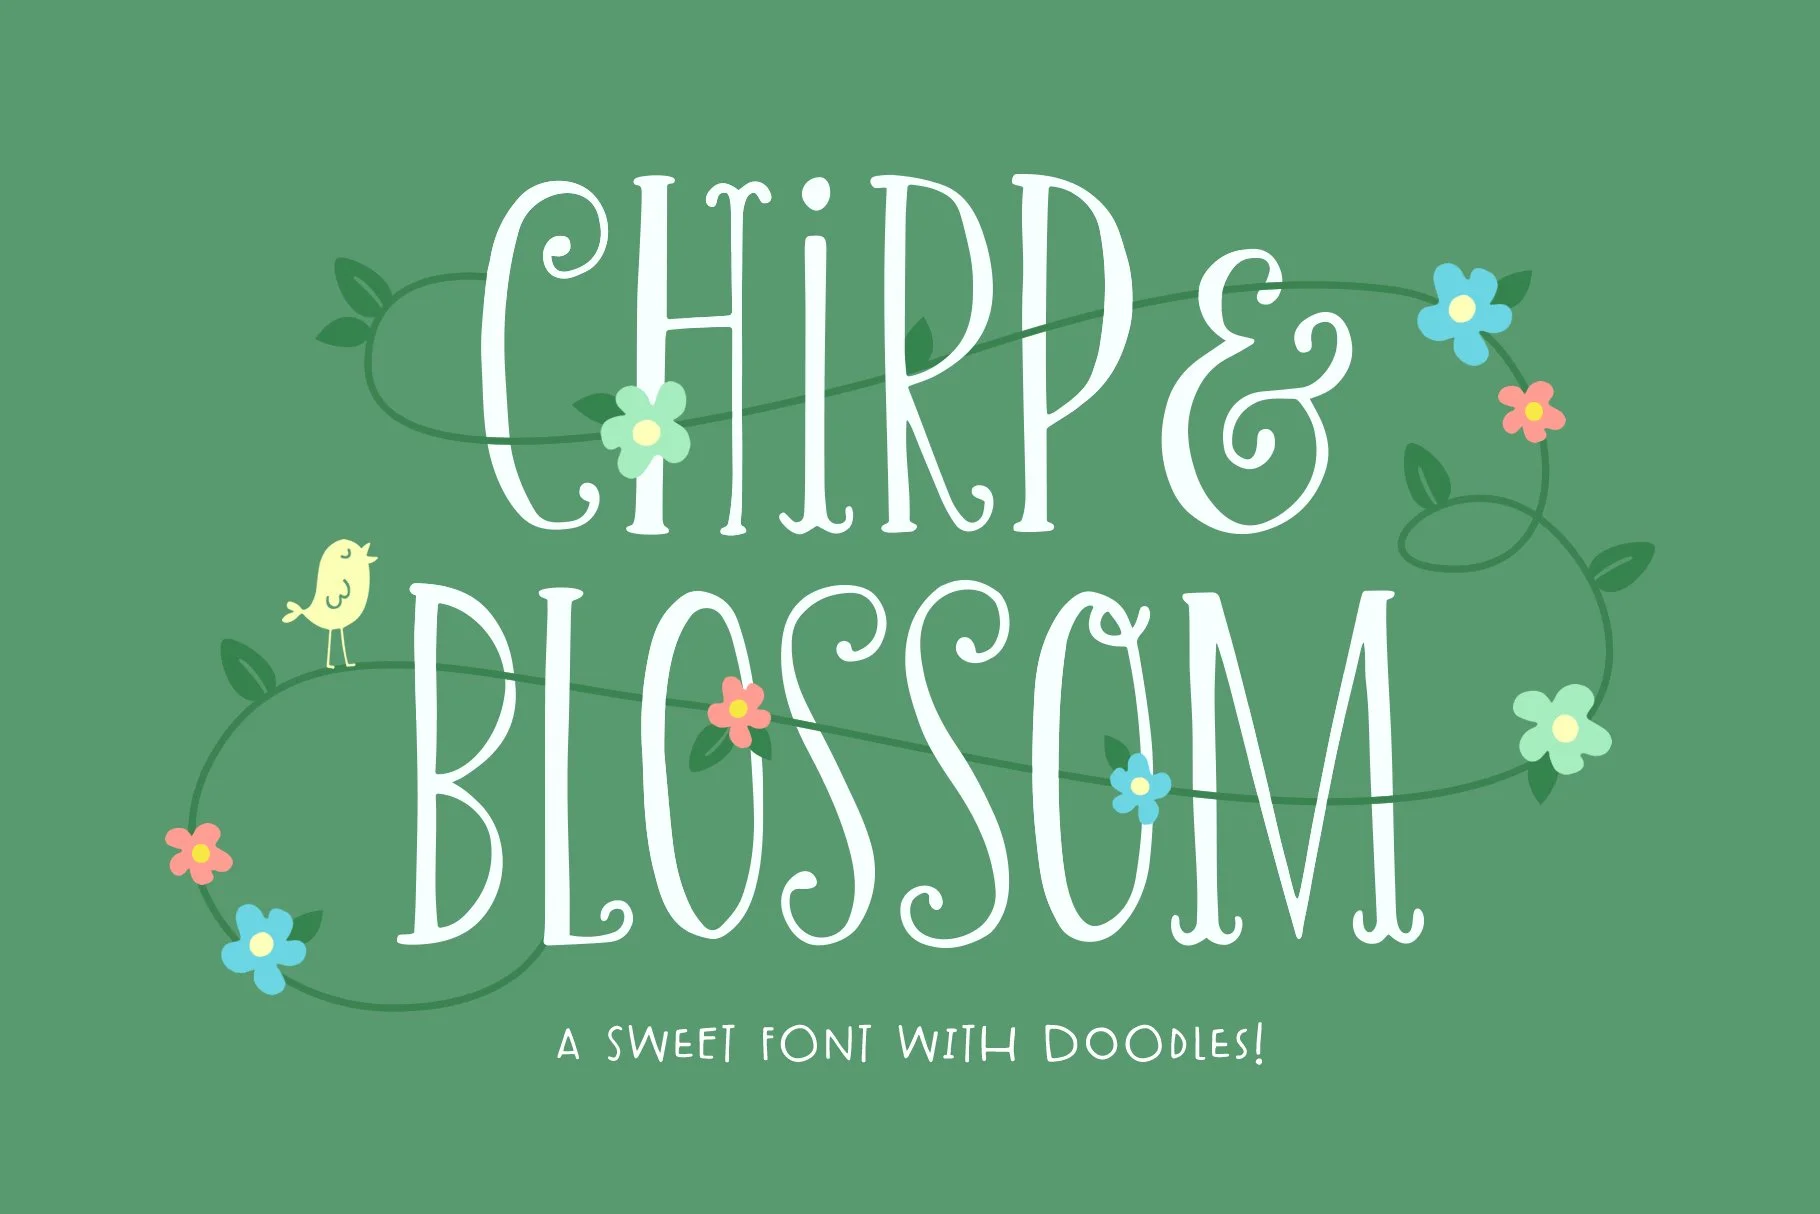 Ejemplo de fuente Chirp And Blossom Doodle